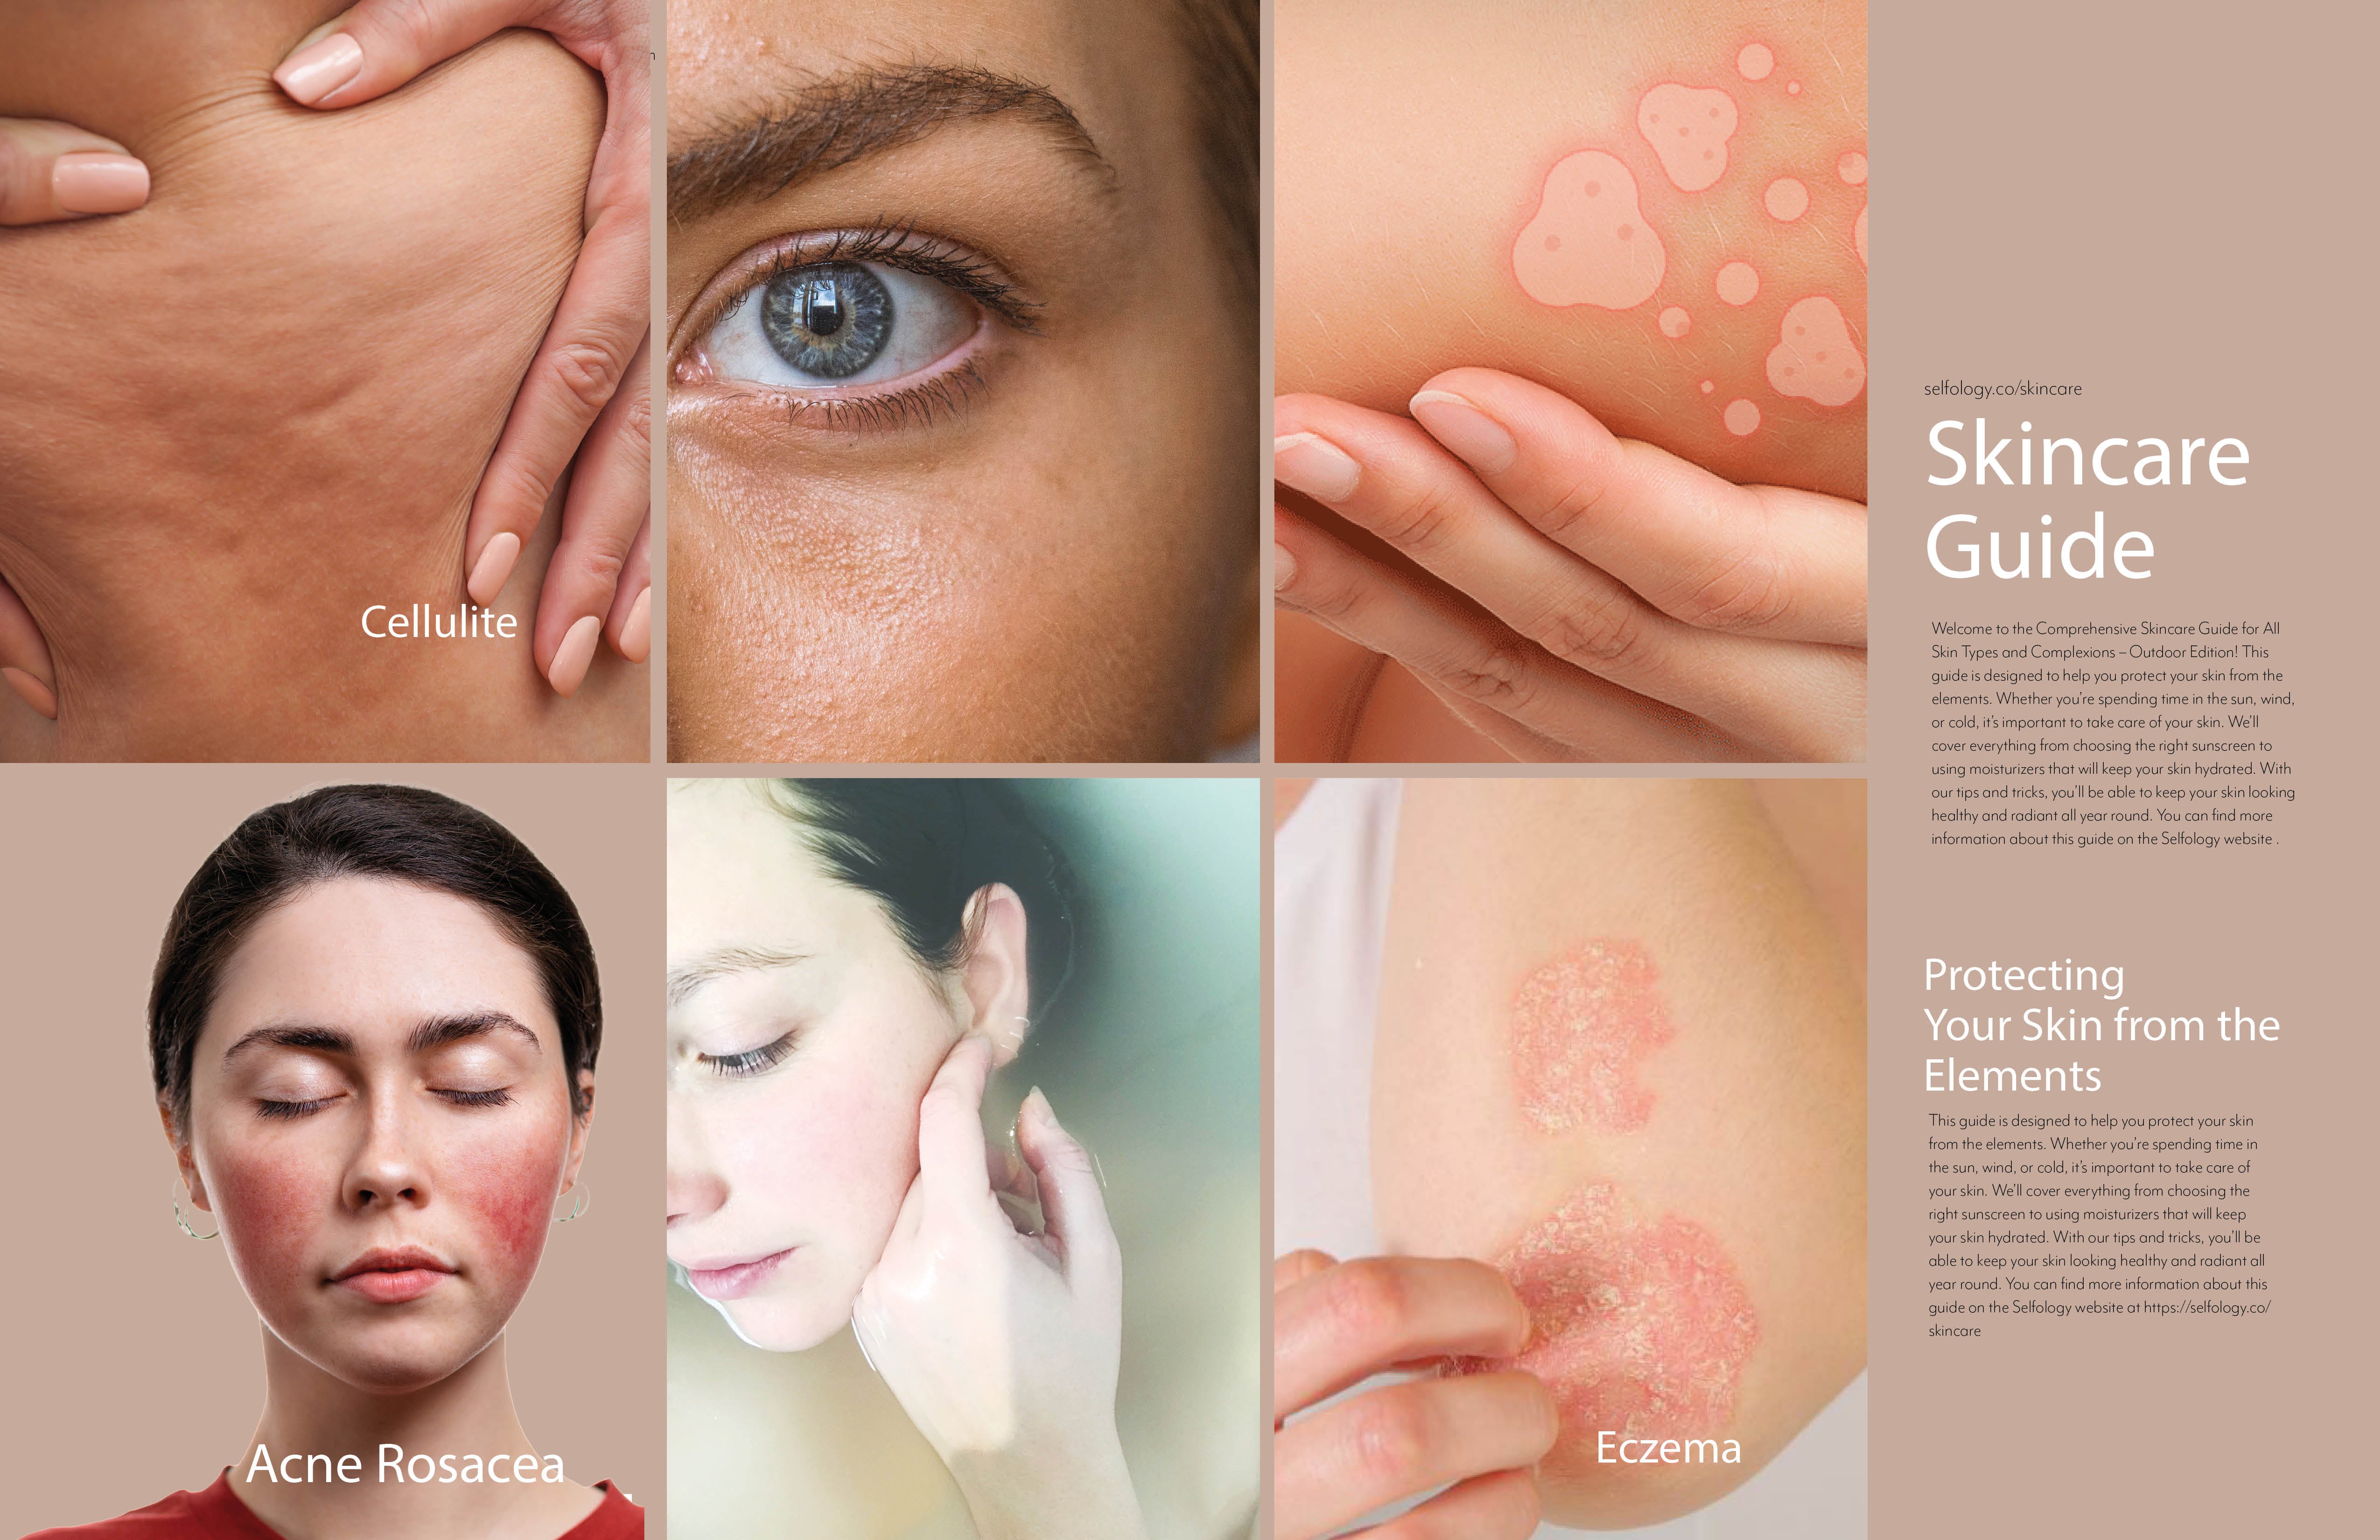 Selfology 3-in-1 TriBella™ Skin Renewal Method - Transform Your Skin with Three Technologies in One